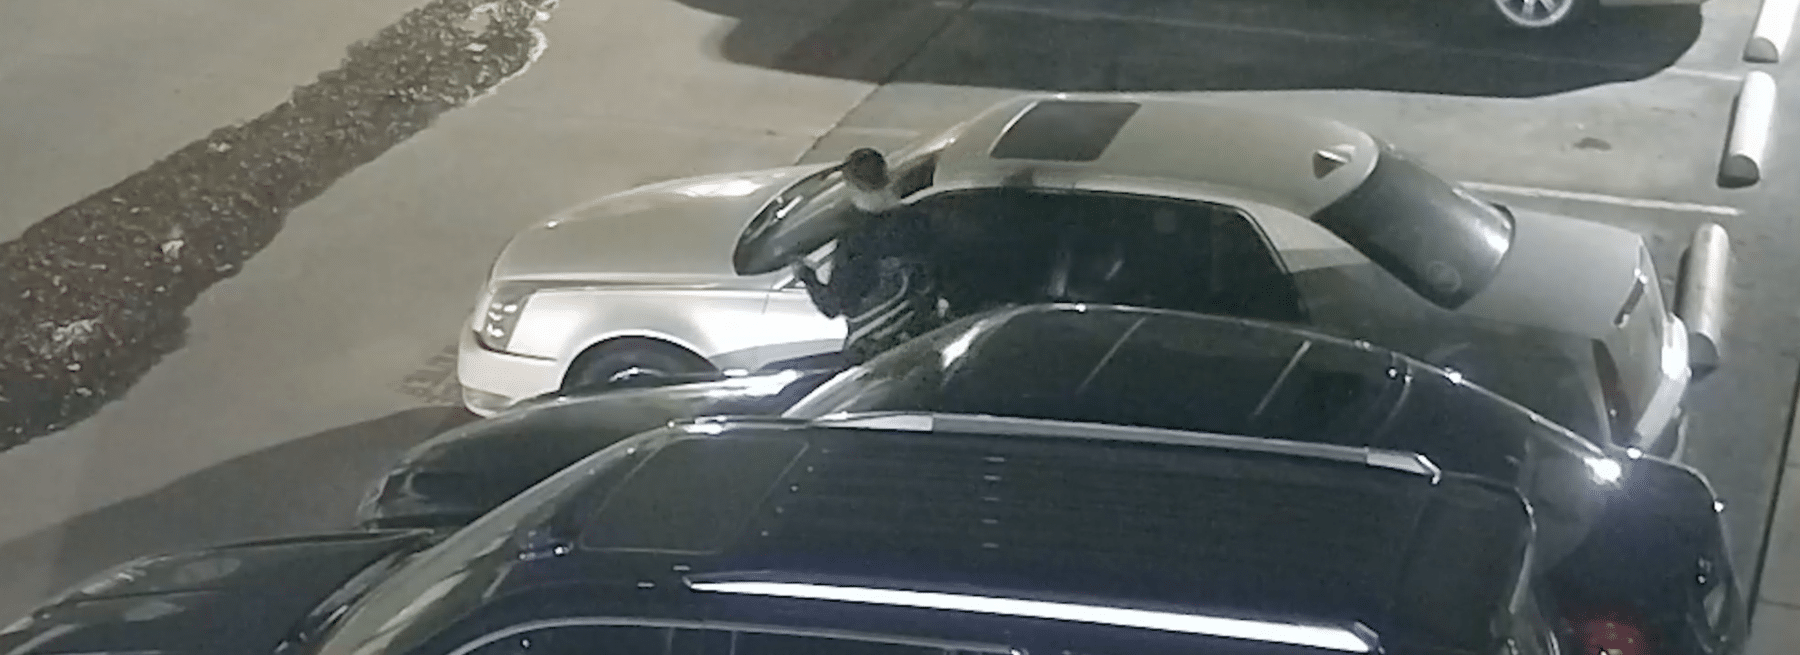 Trespasser caught breaking into vehicle at auto dealership